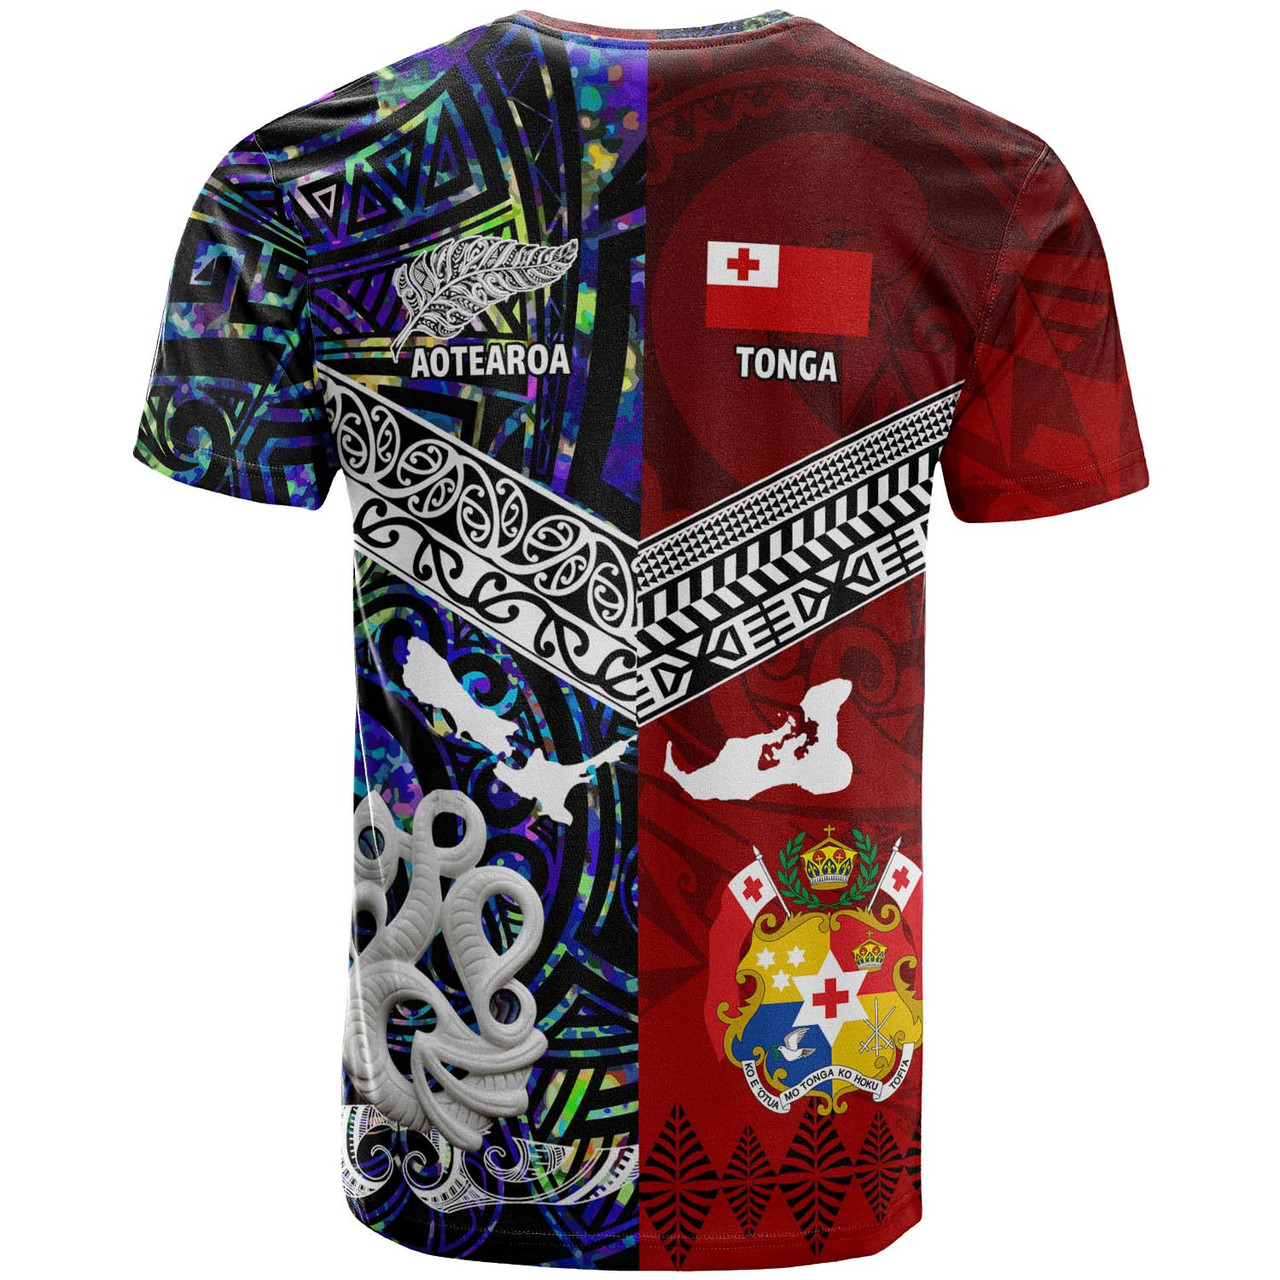 Tonga Polynesian T-shirt - Tonga And Aotearoa Polynesian Coat Of Arms T-shirt